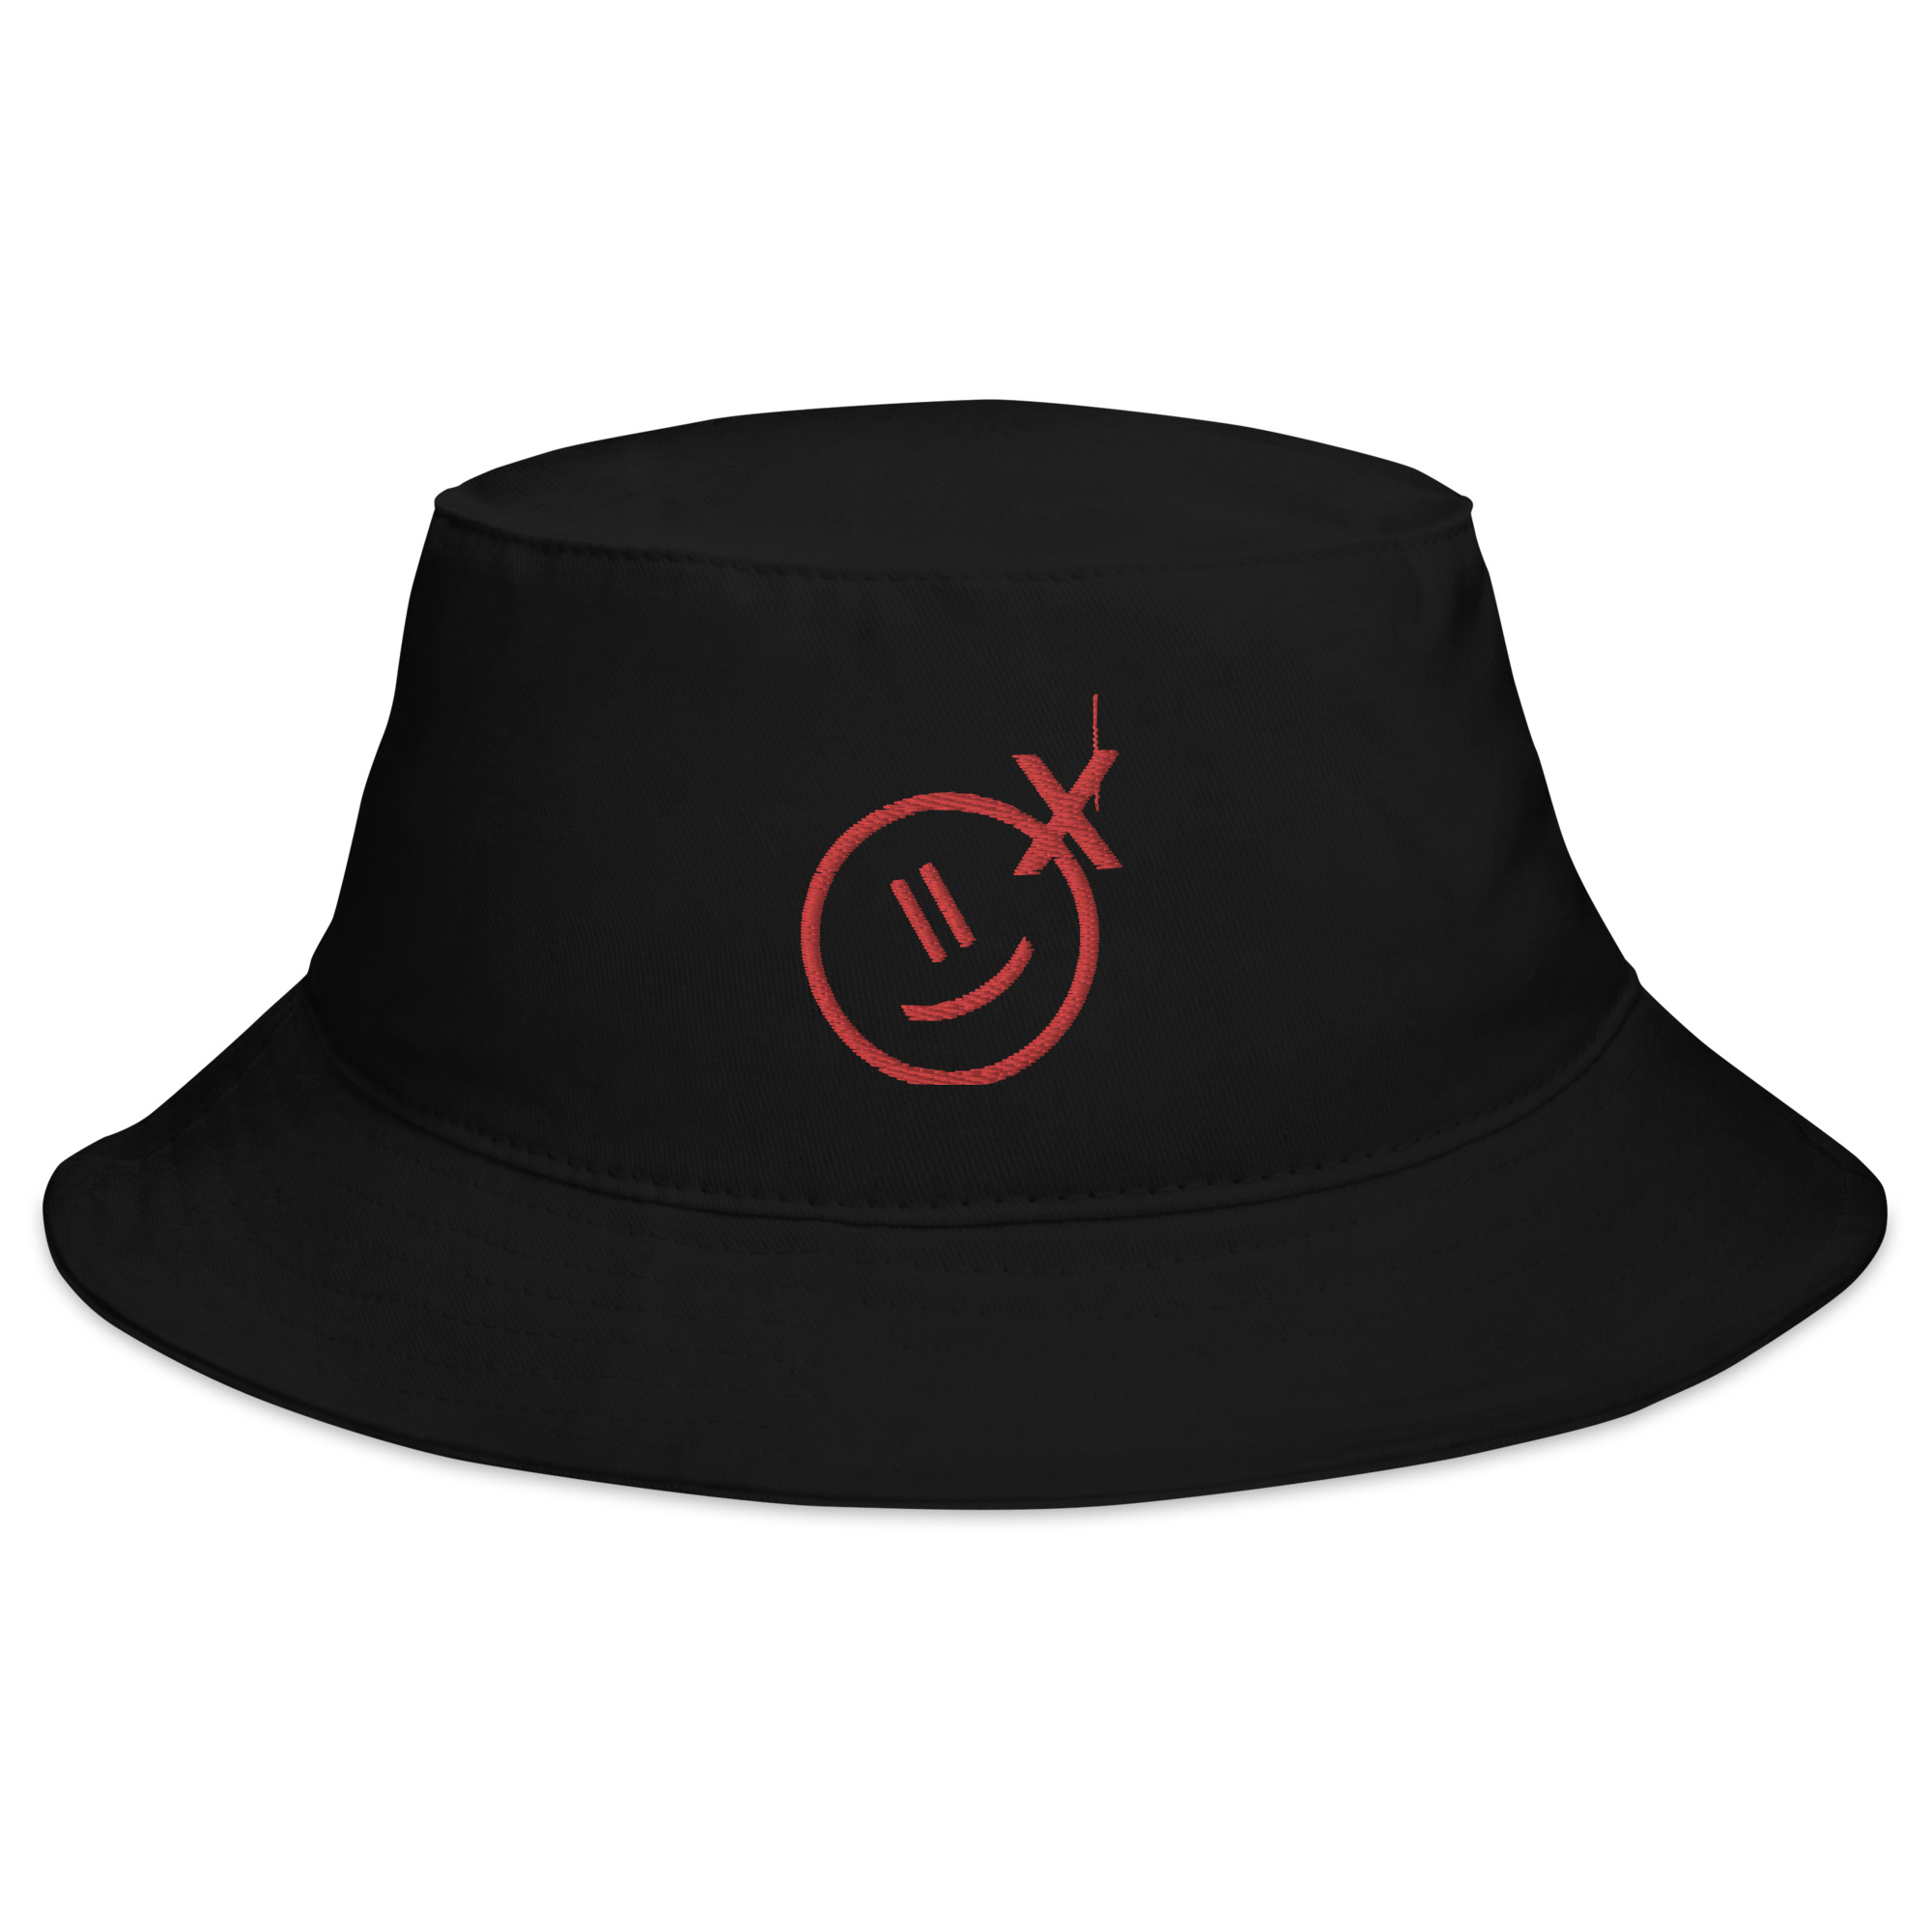 bucket-hat-i-big-accessories-bx003-black-front-64e181a43cbce.jpg